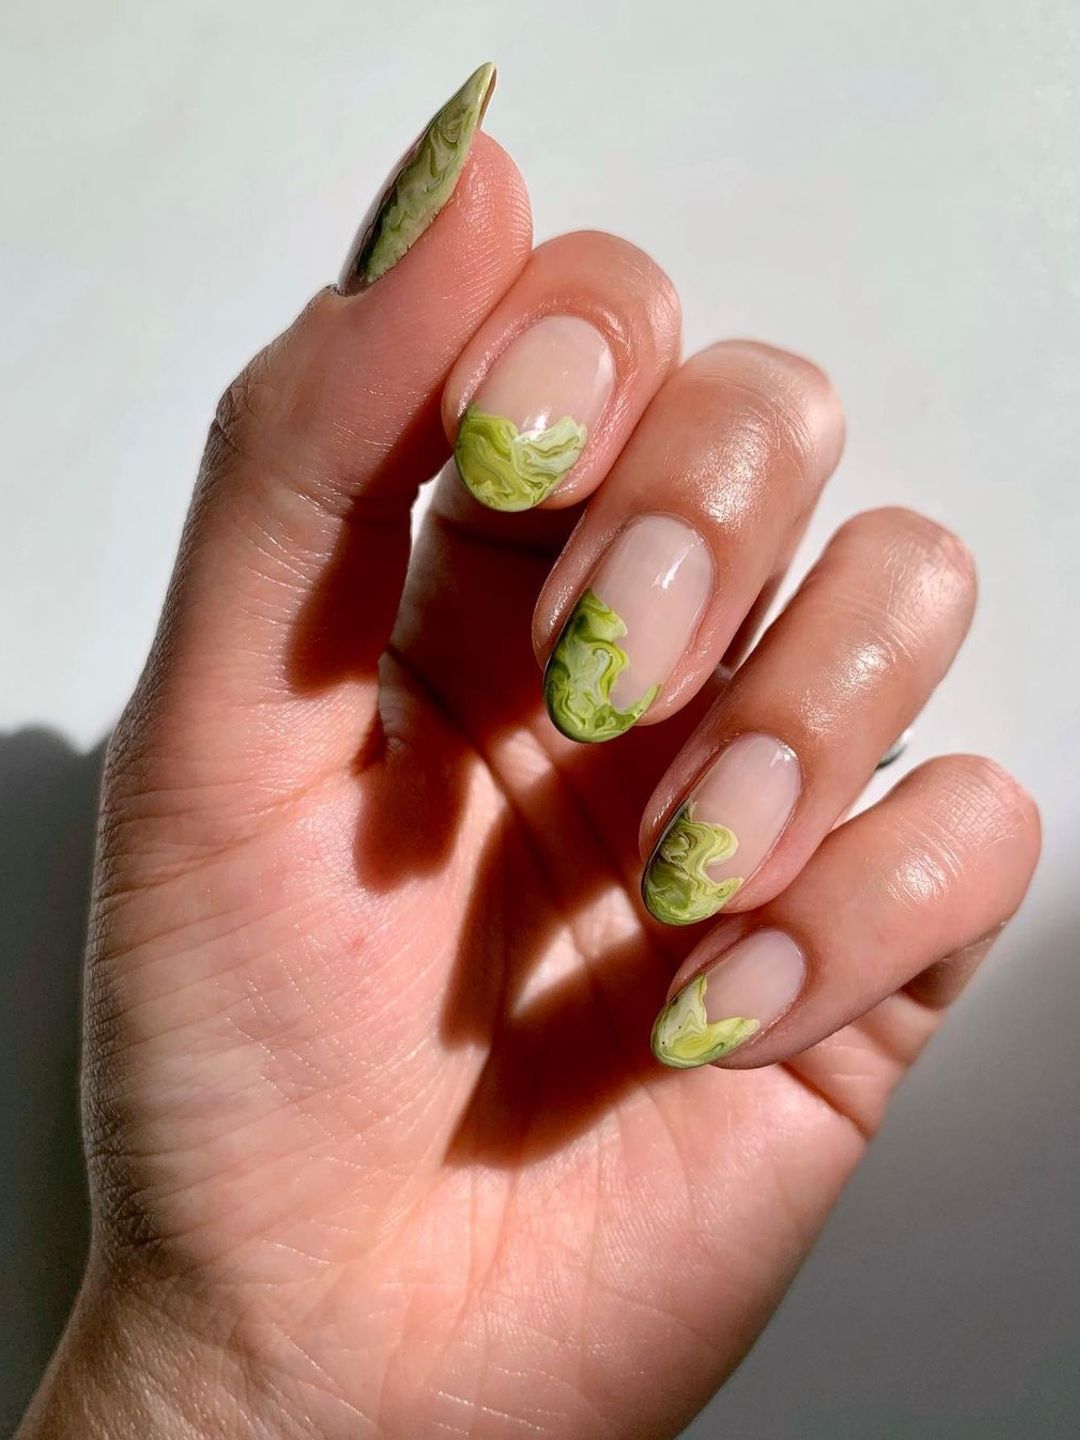 The perfect matcha swirl nails by @sammismanis